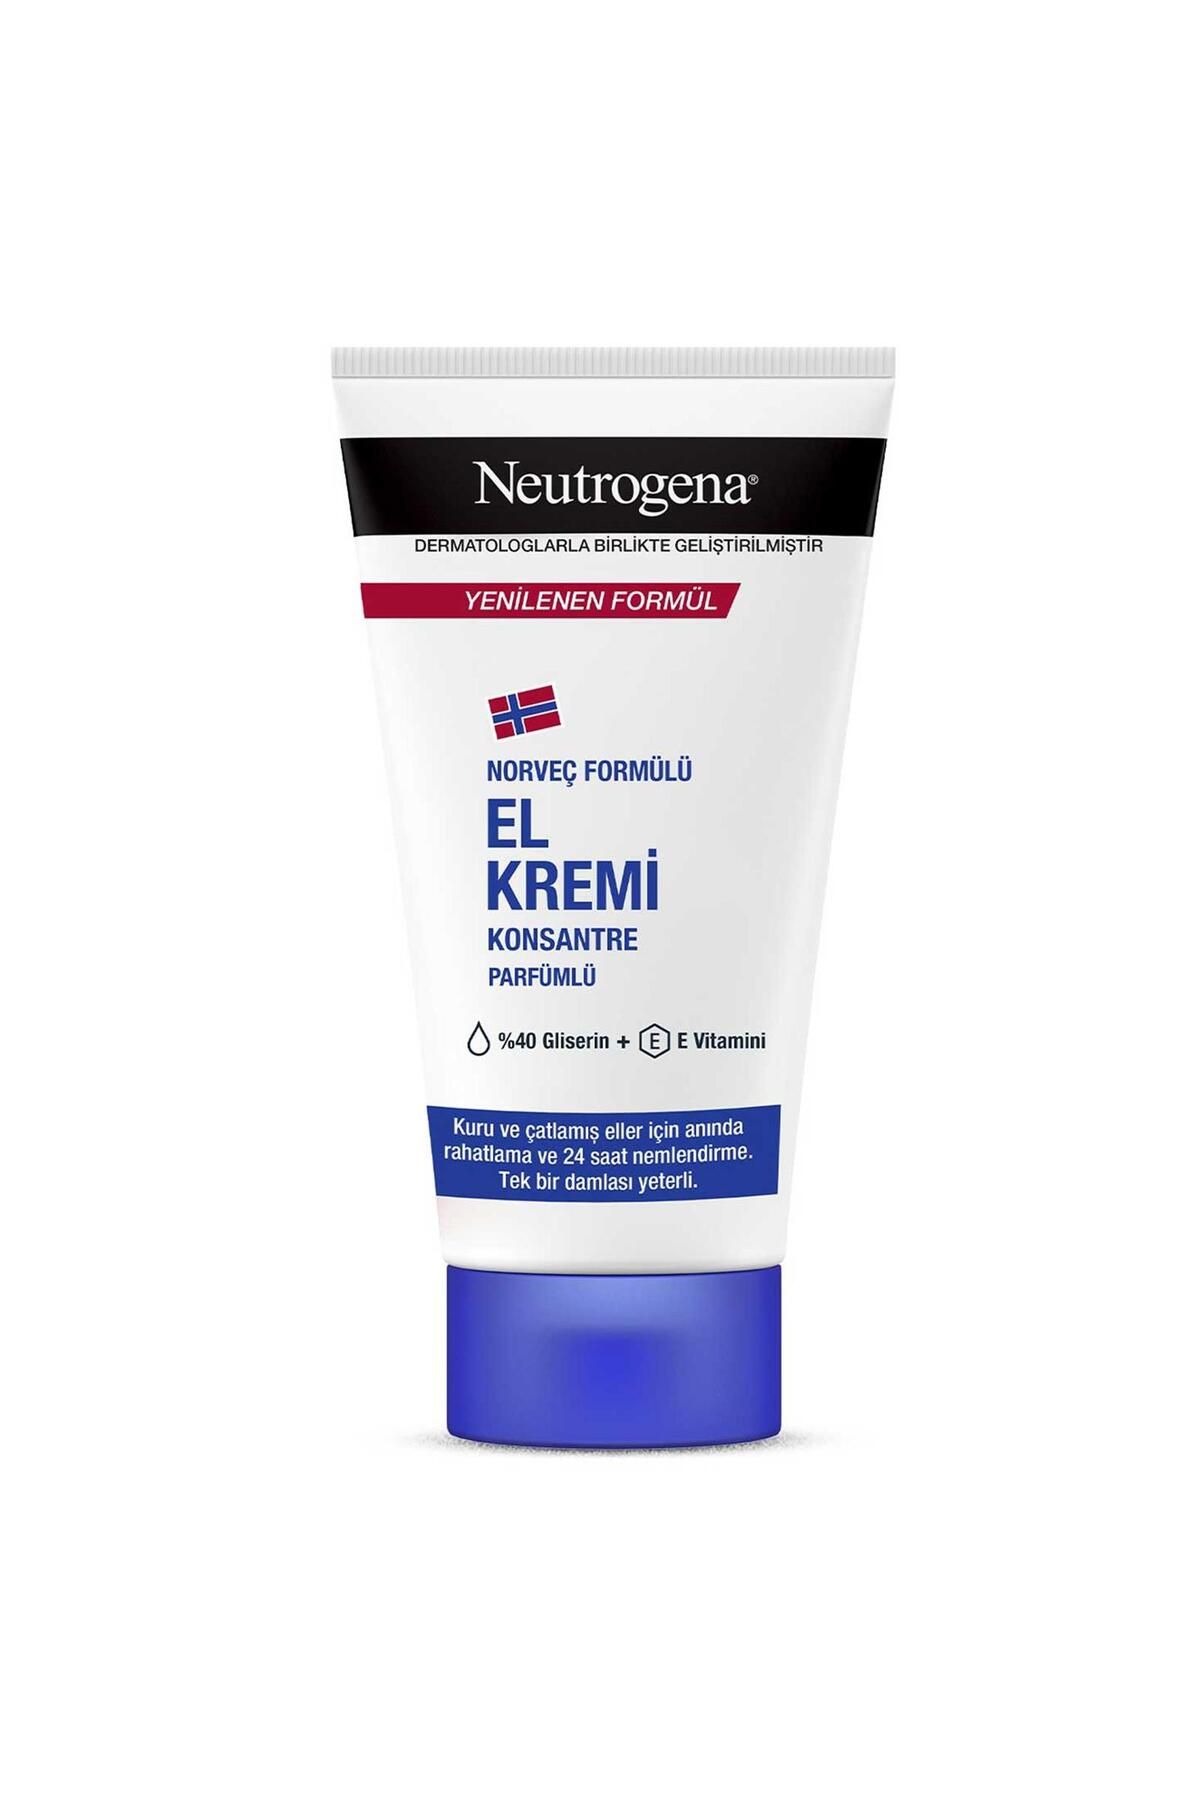 Neutrogena Konsantre Formüllü Parfümlü El Kremi 75 ml